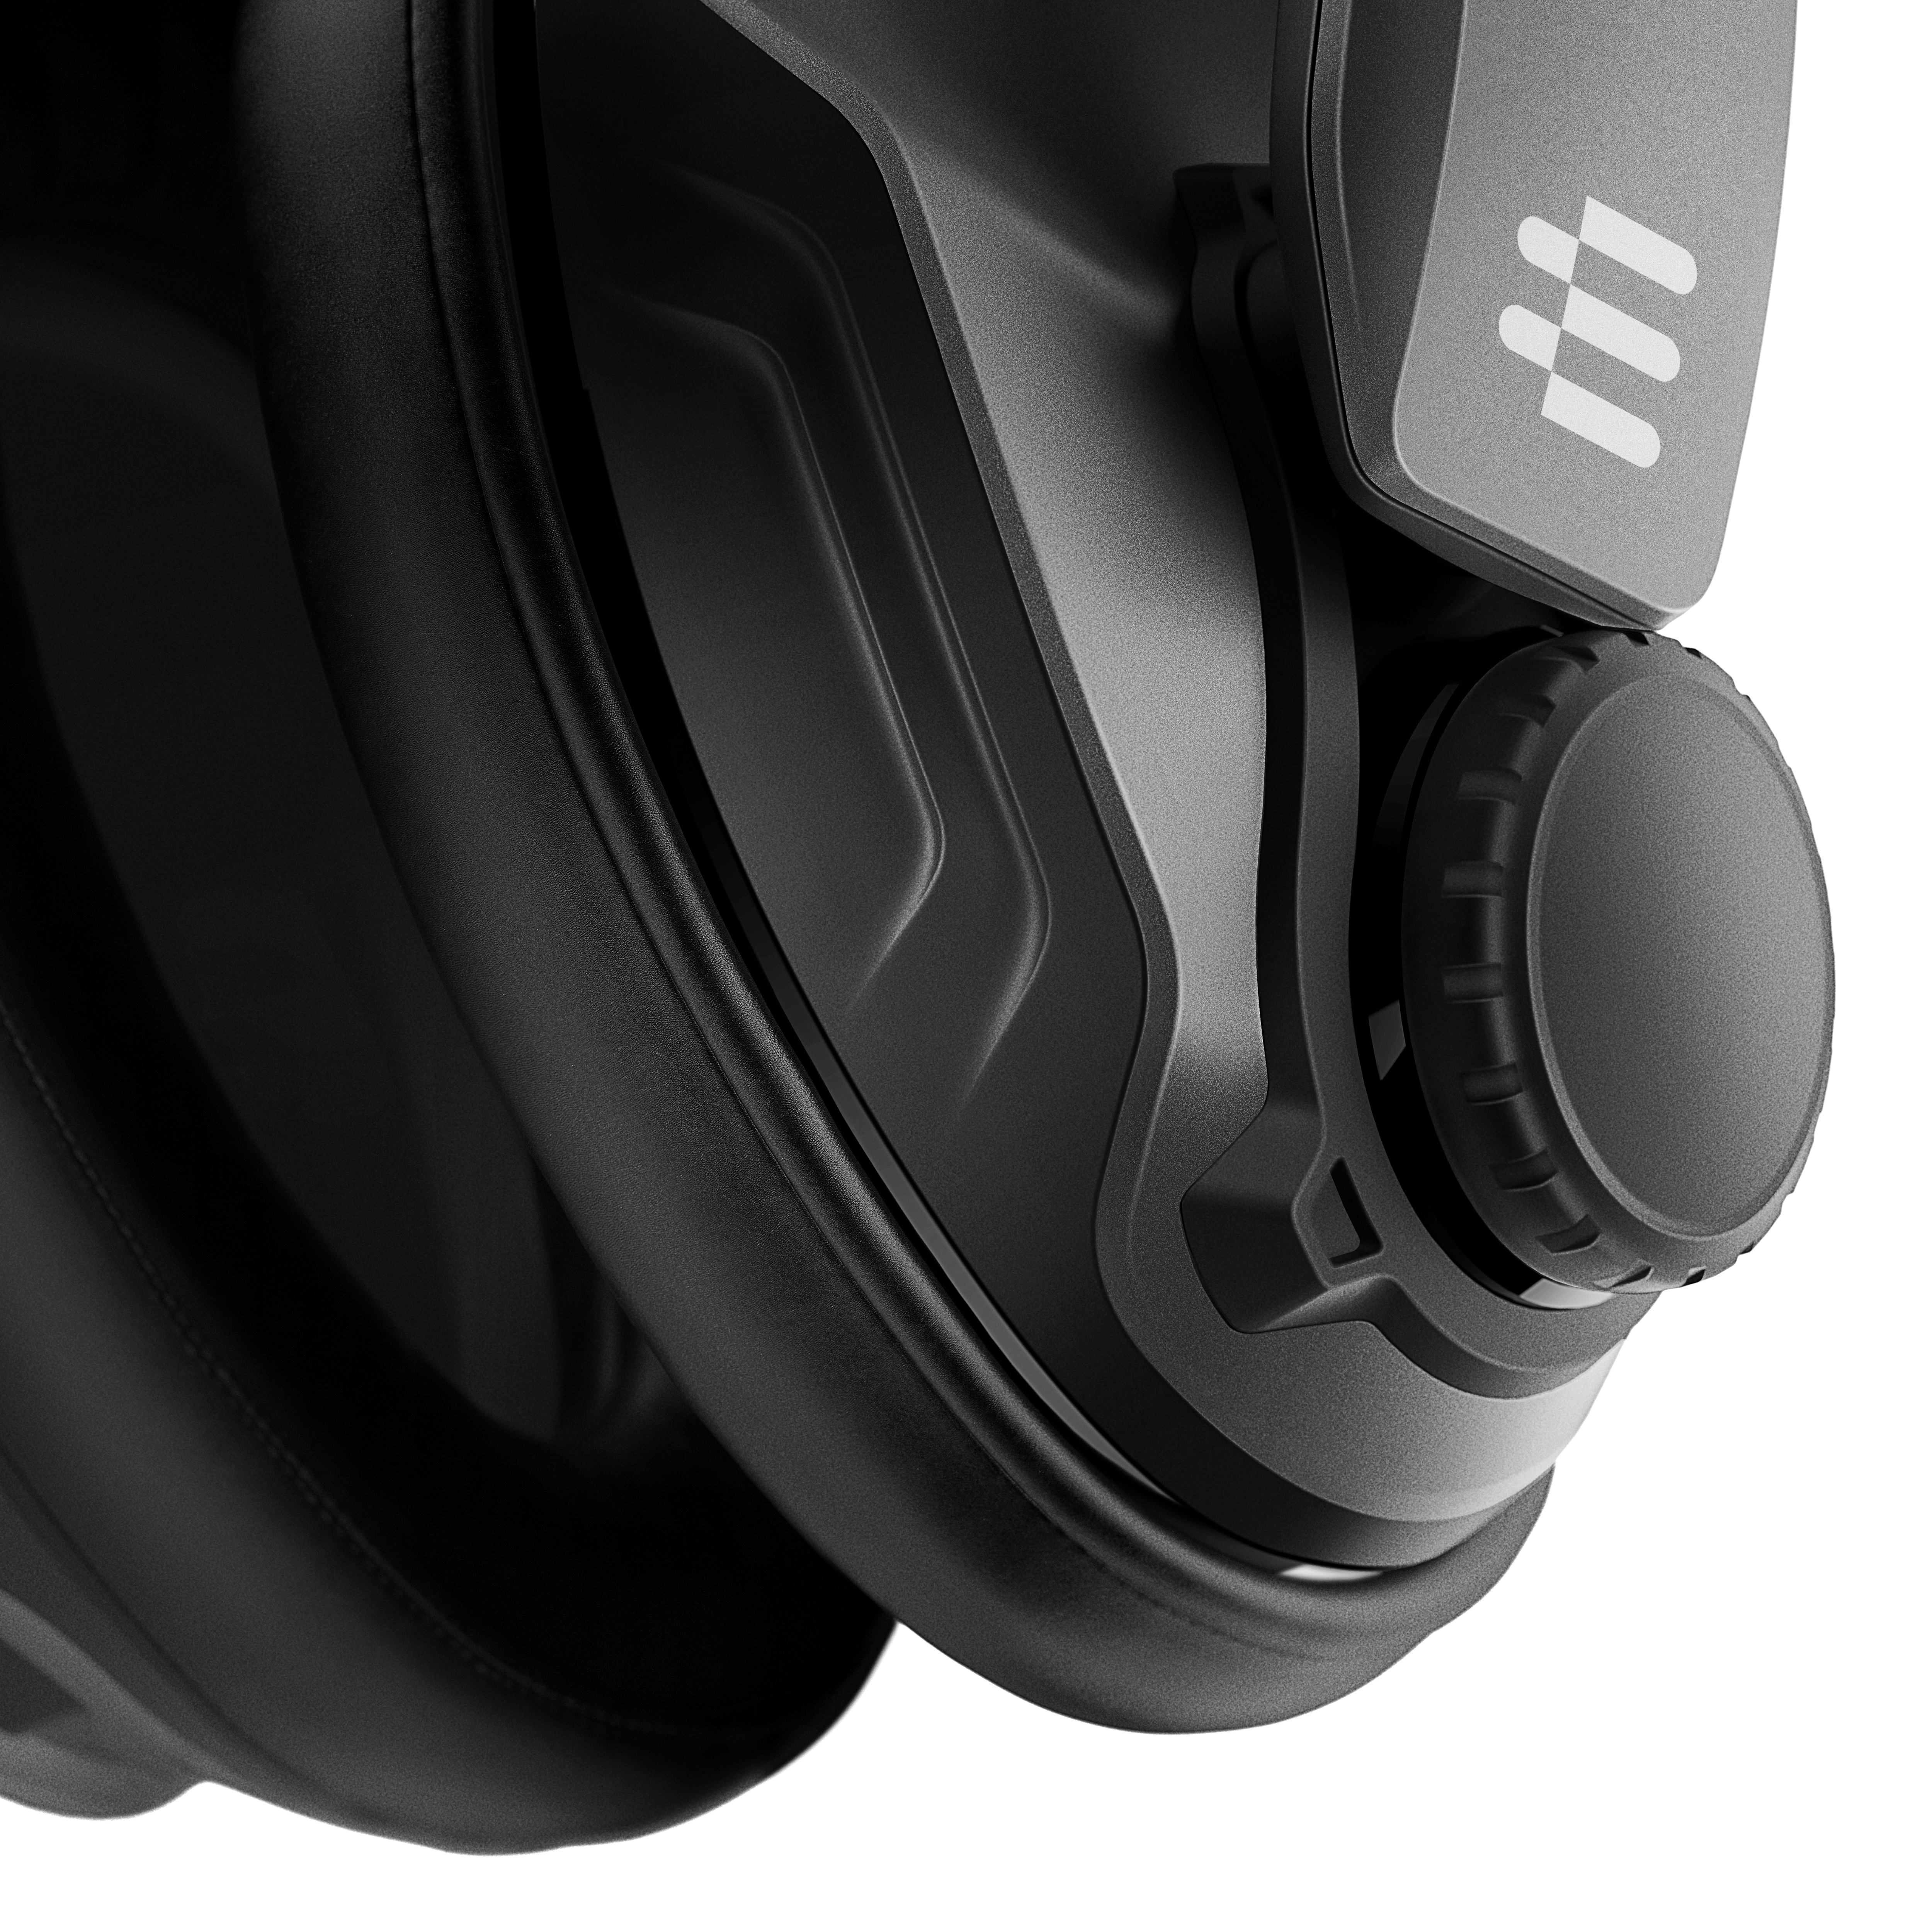 Bluetooth , EPOS Schwarz Headset Over-ear 370 SENNHEISER GSP Gaming